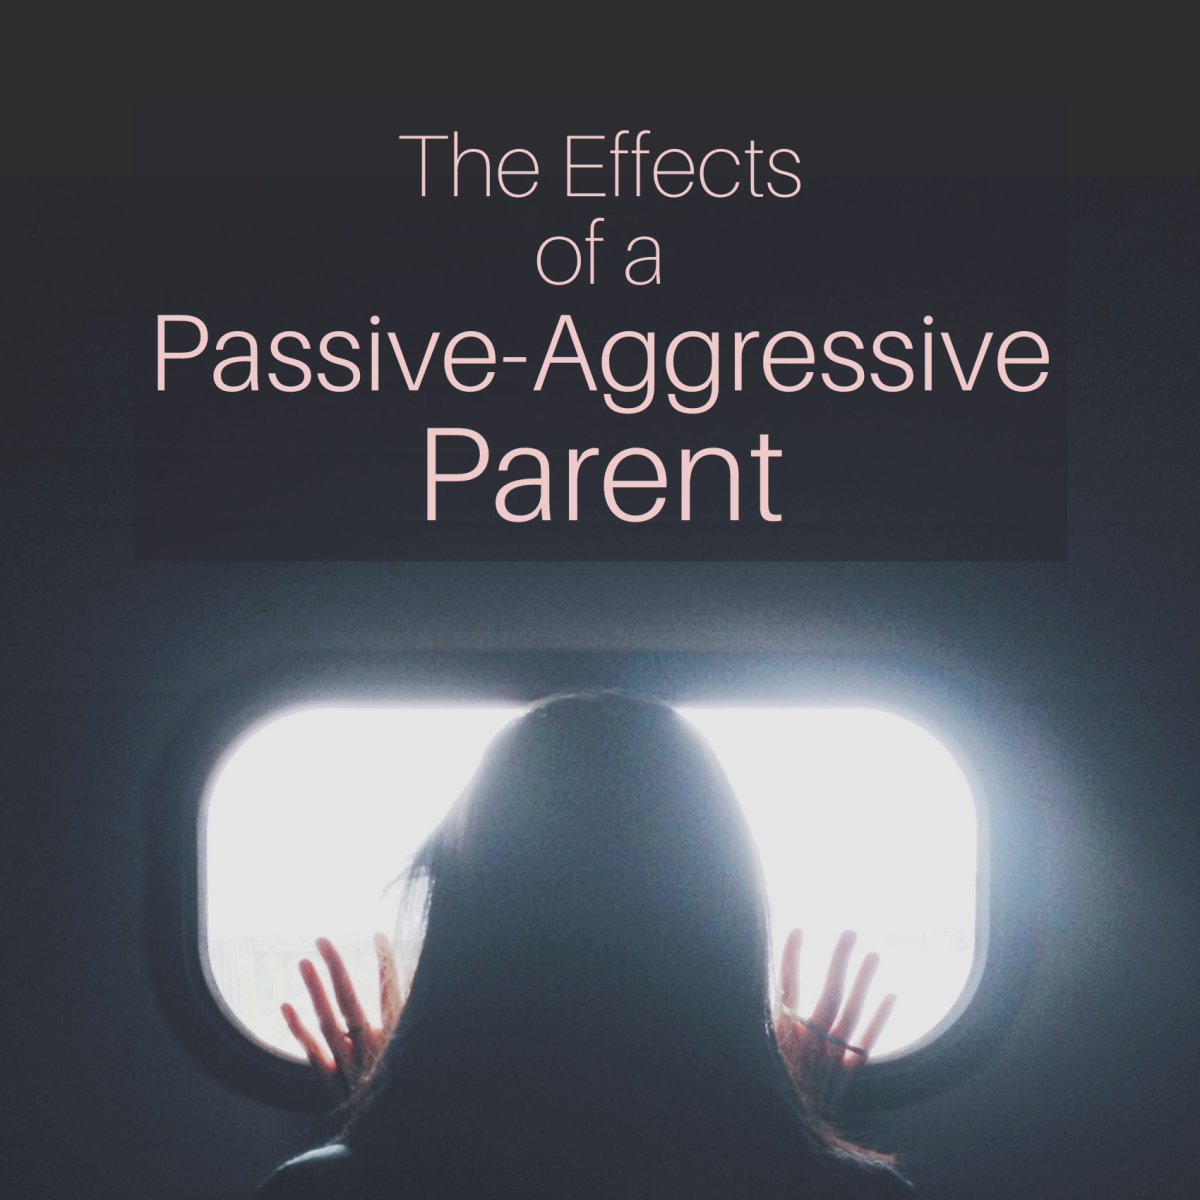 passive behaviour characteristics